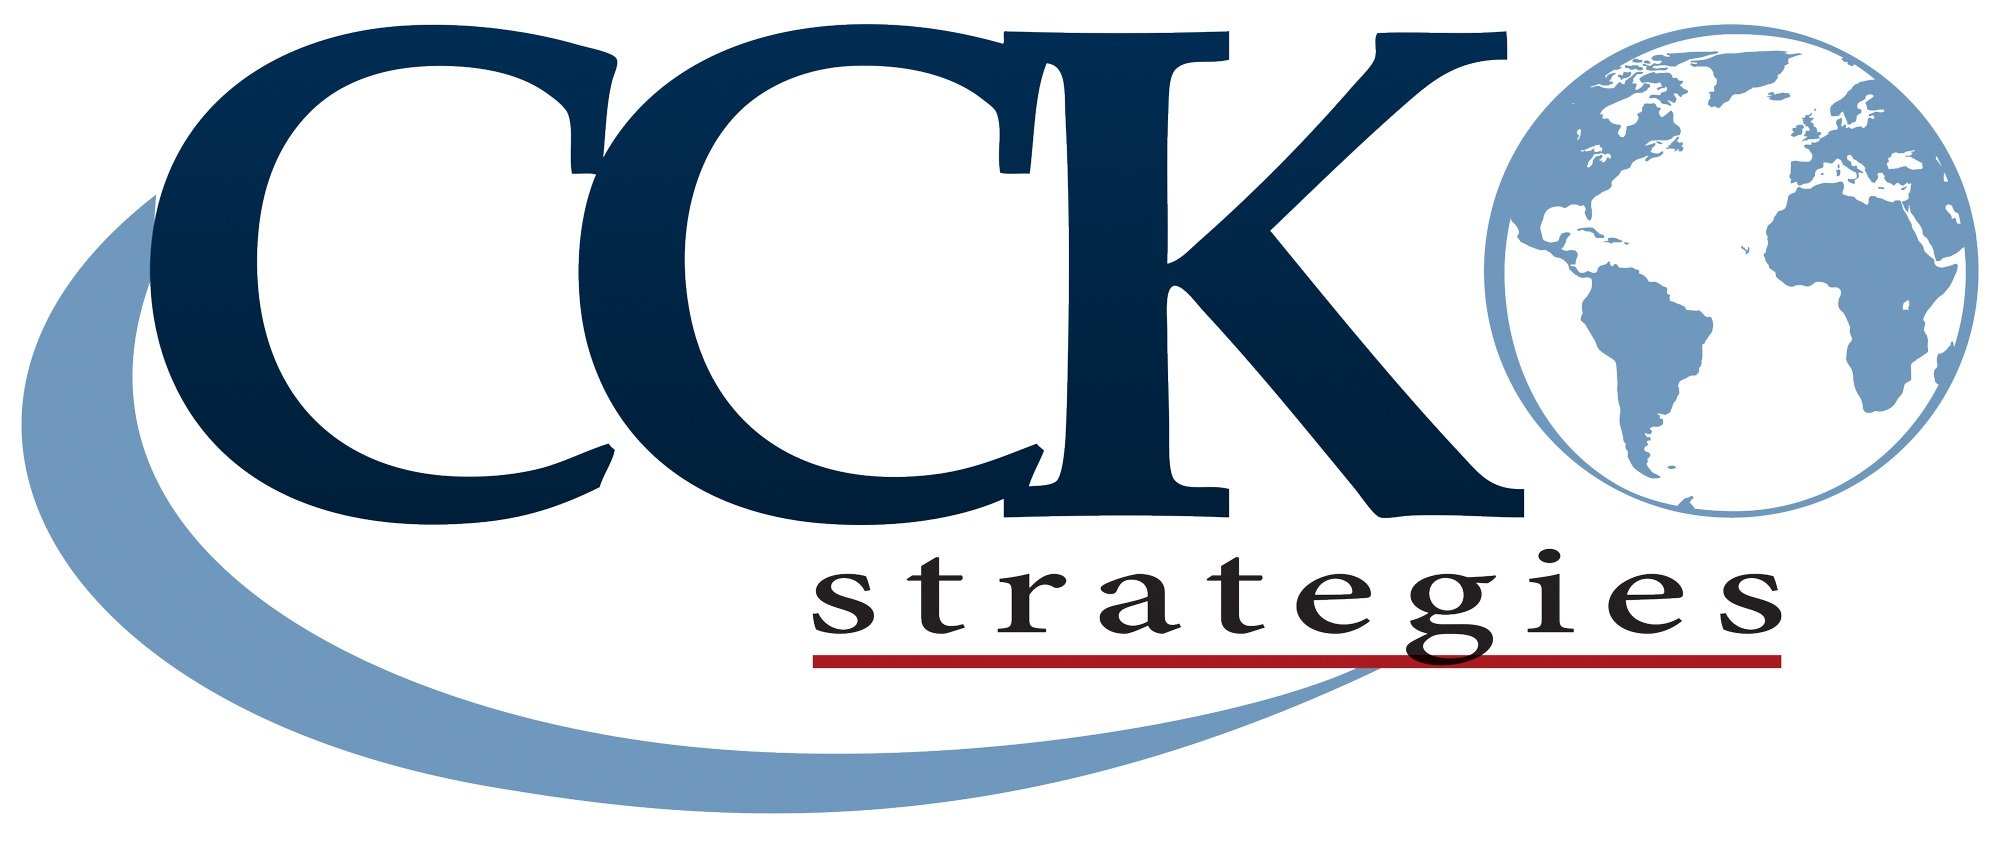 CCK-Logo-.jpg